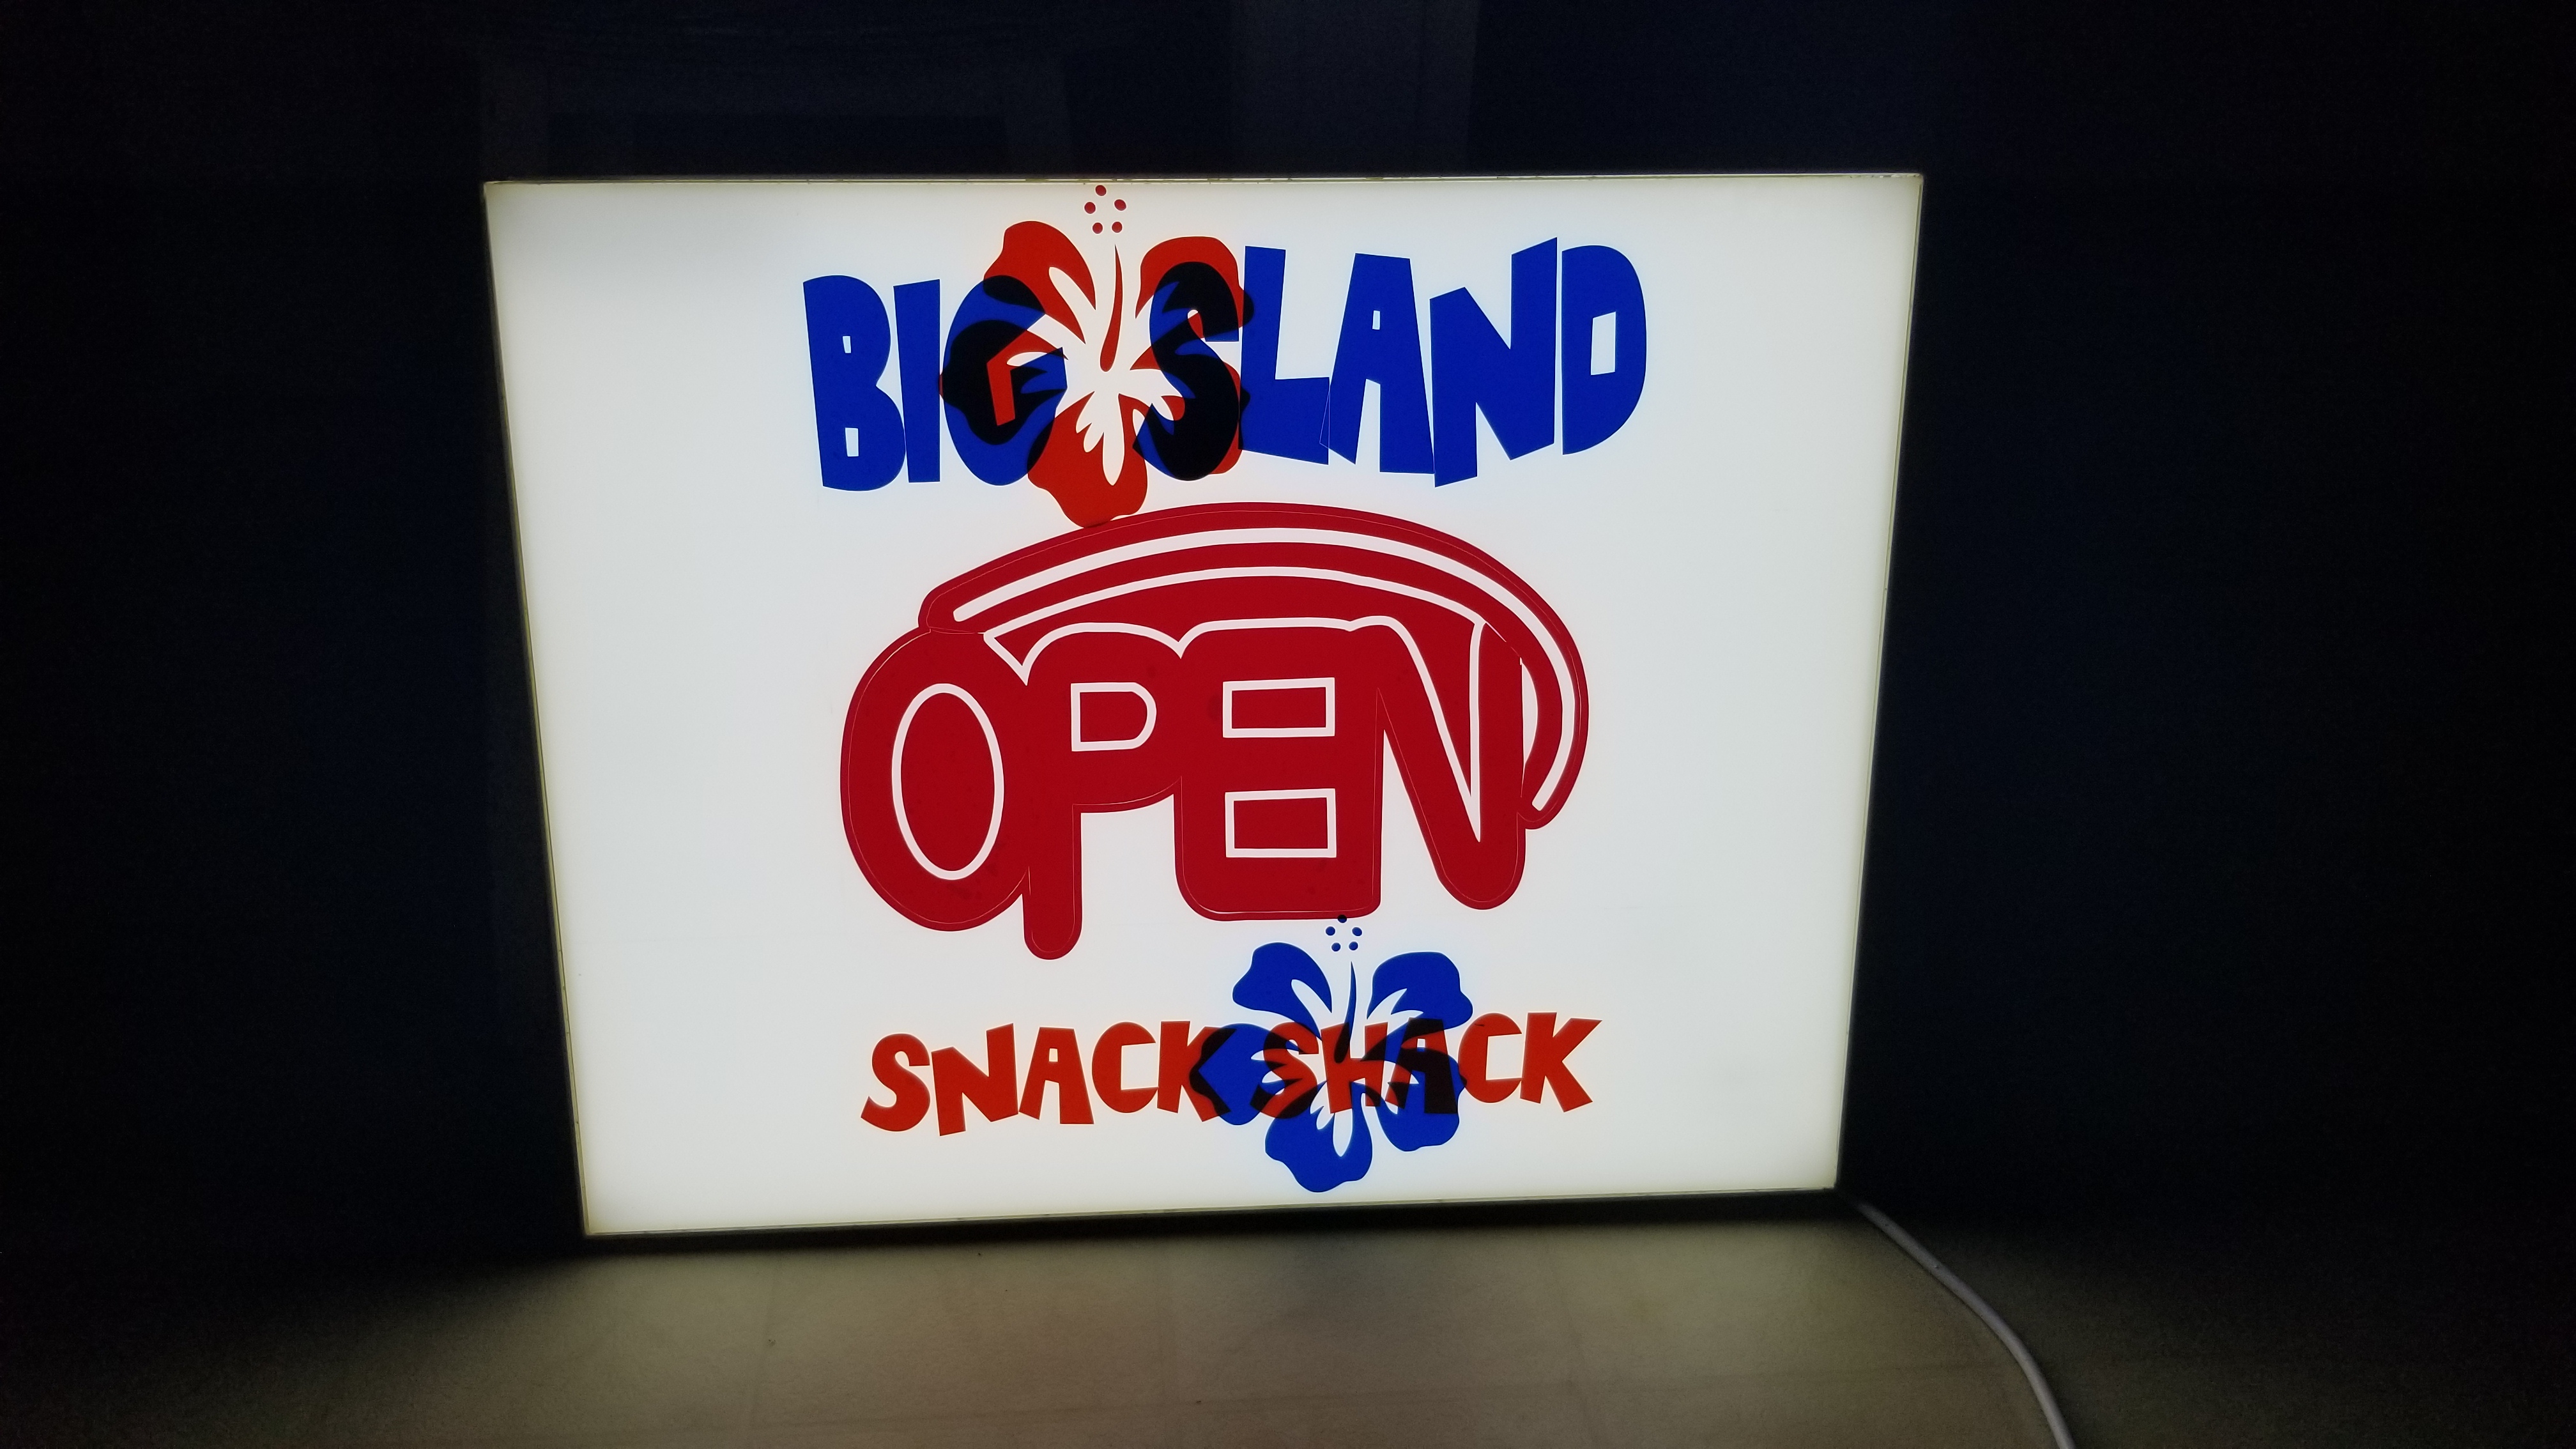 Big island snack shack food truck profile image